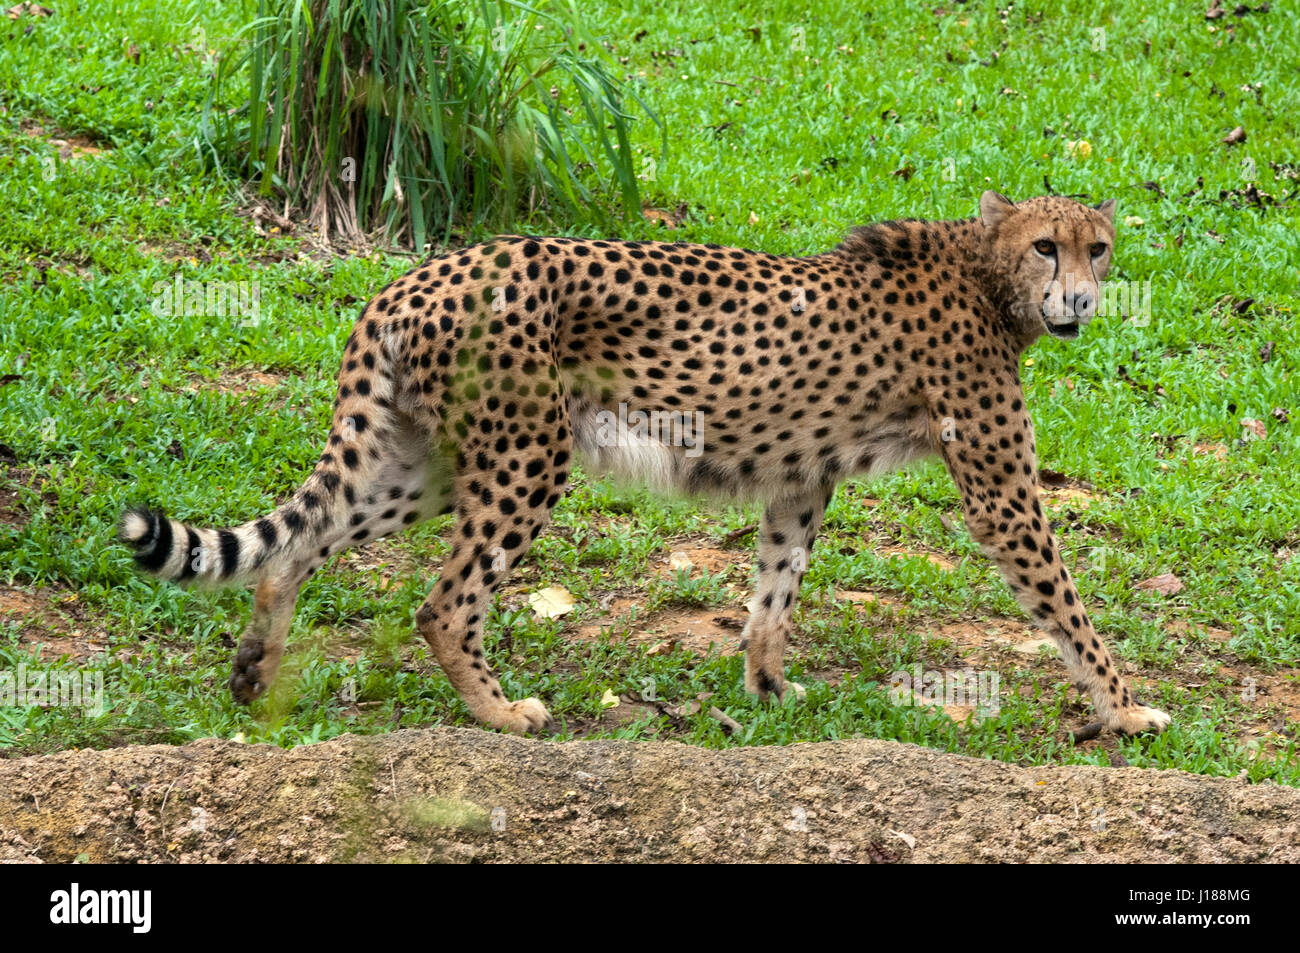 South East Asia Singapore Singapore Zoo Cheetah Acinonyx Jubatus Stock Photo Alamy